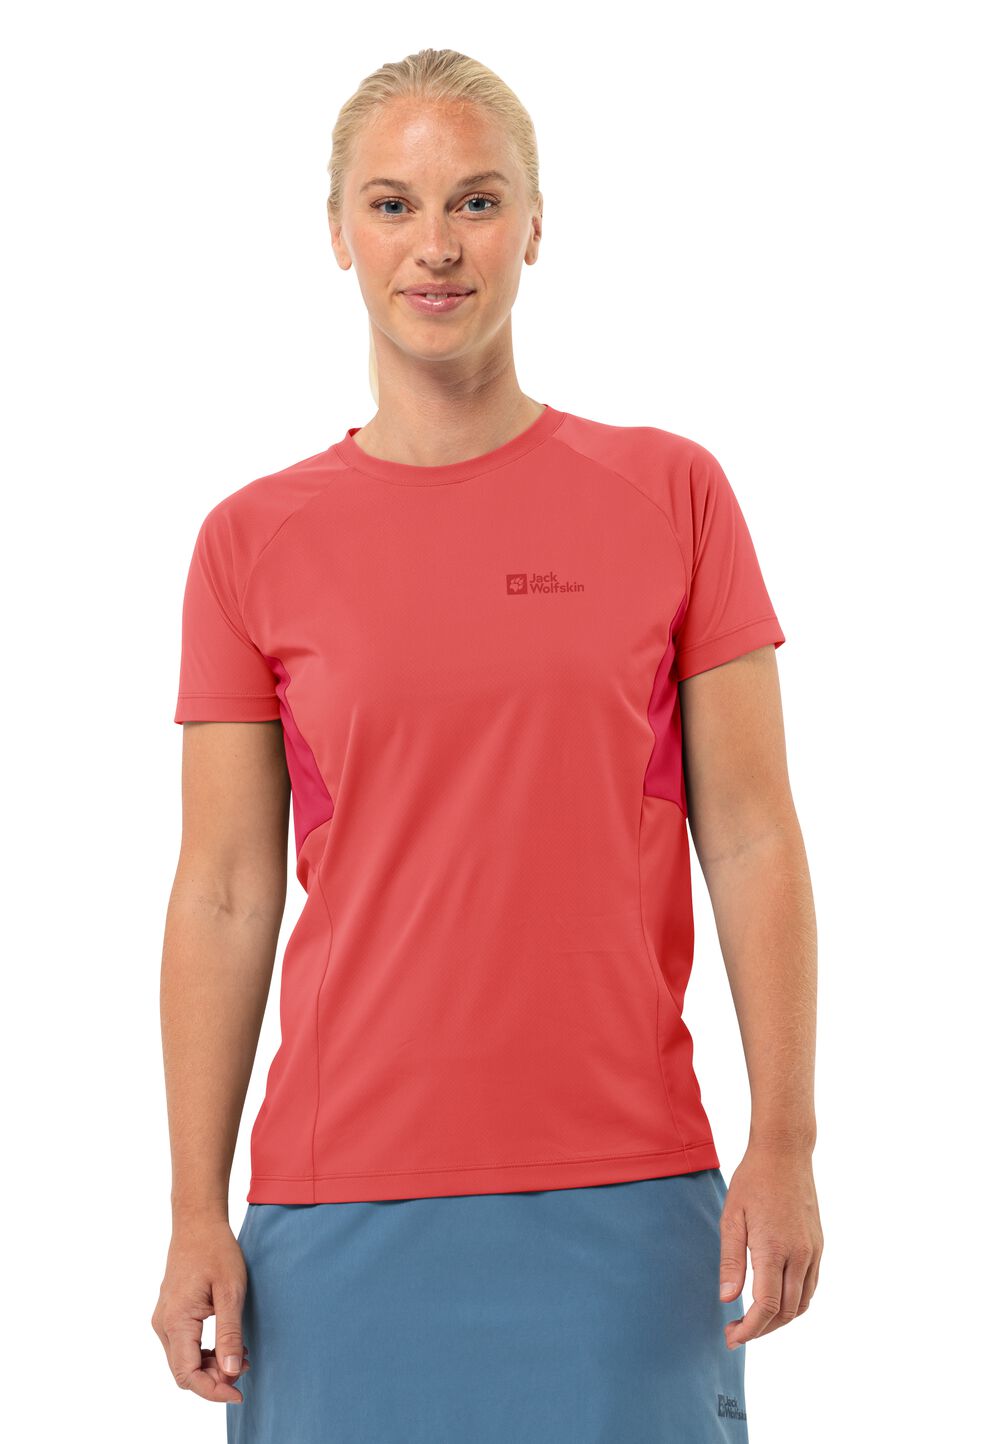 Jack Wolfskin Narrows T-Shirt Women Functioneel shirt Dames M rood vibrant red